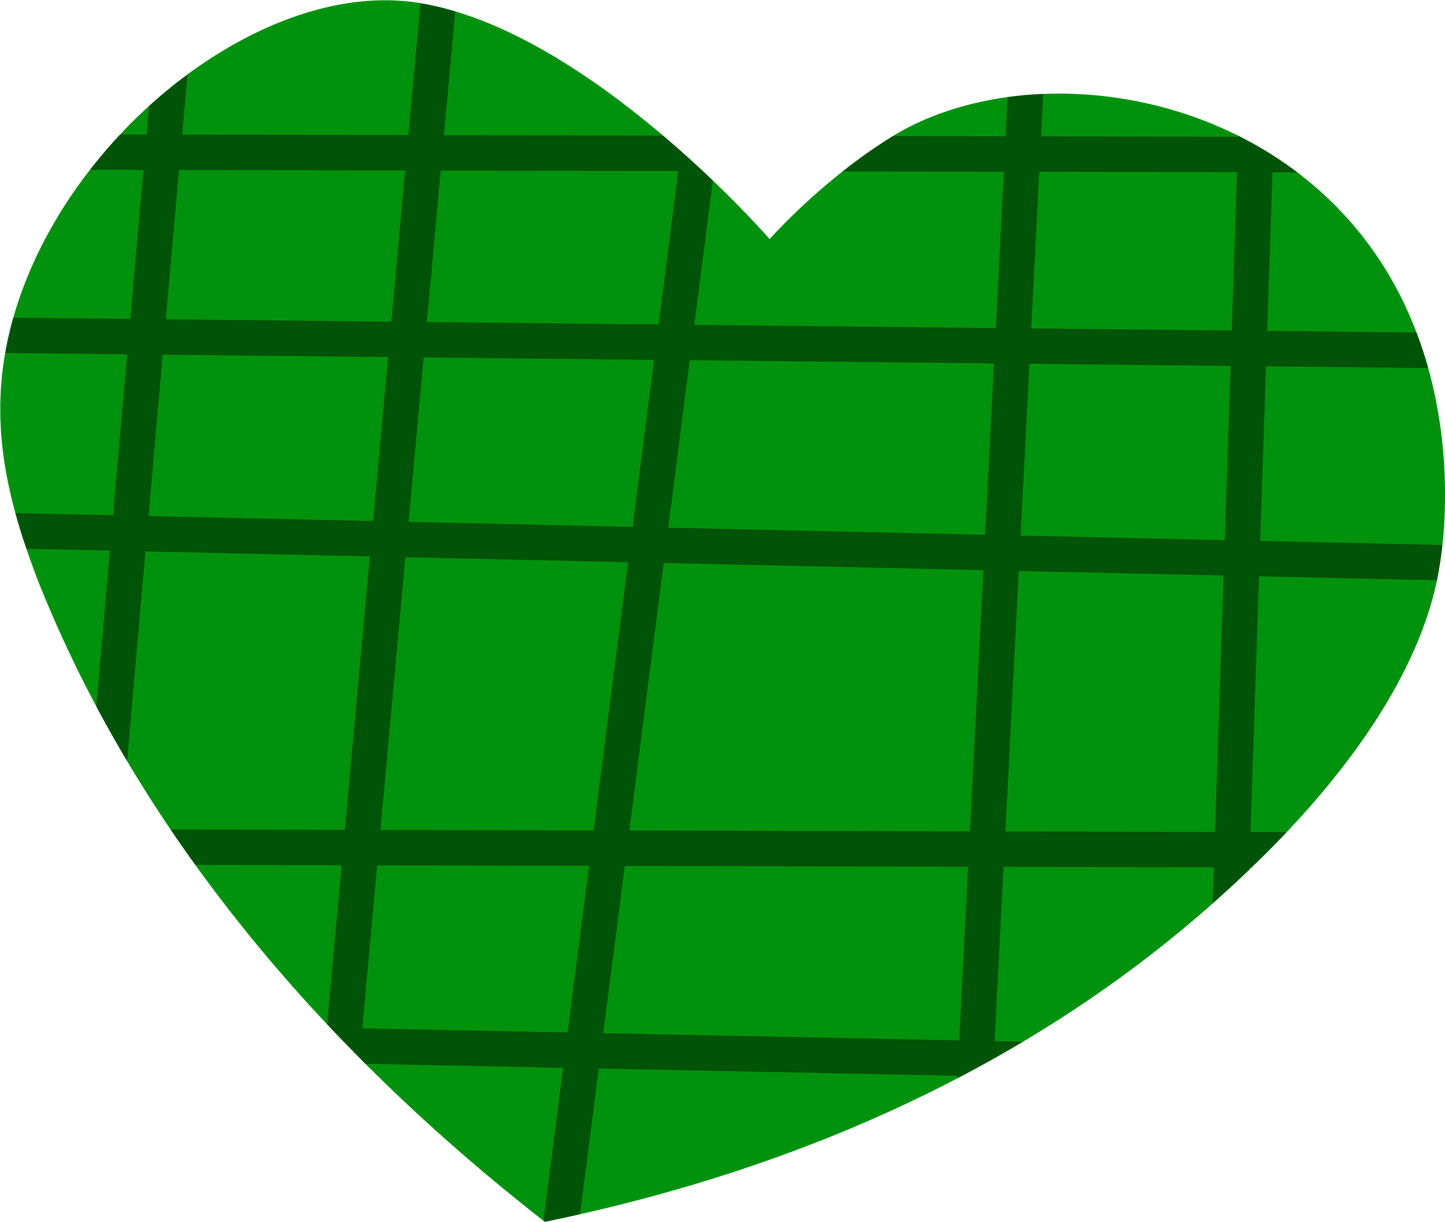 Inspirational Quote Green Heart St. Patrick's Day Motivational Sticker Vinyl Decal Motivation Stickers- 5" Vinyl Sticker Waterproof